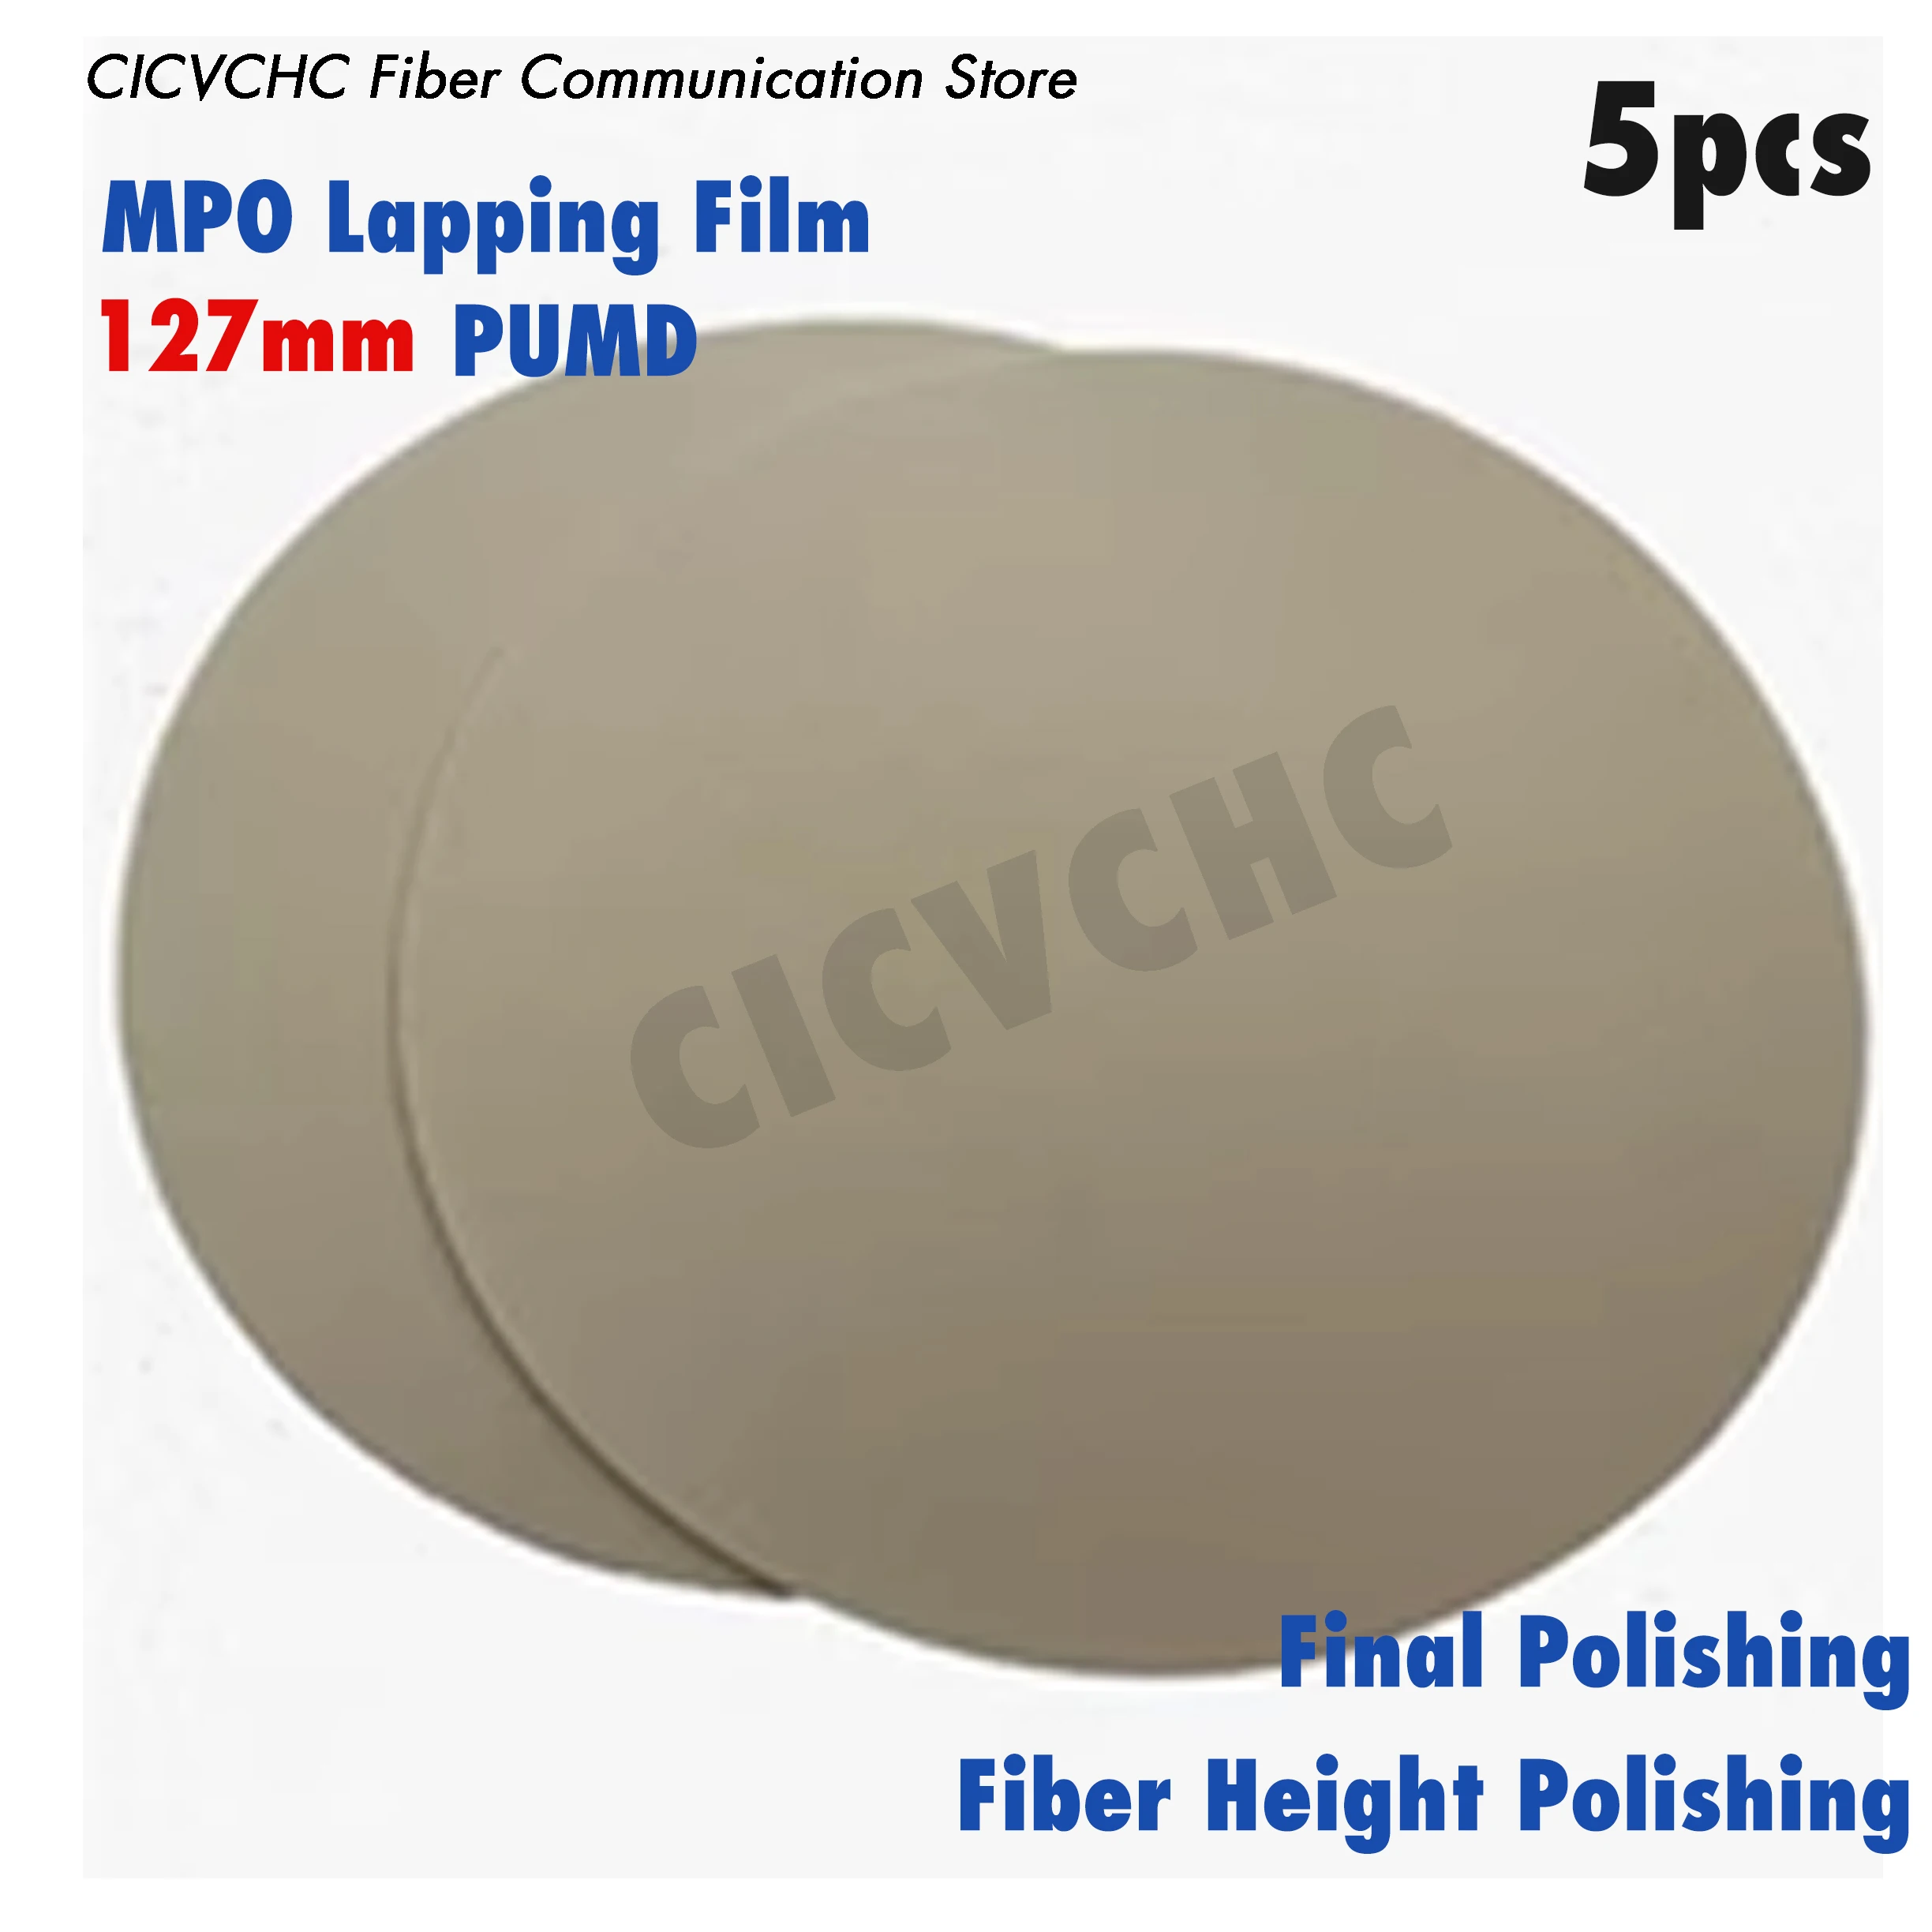 5pcs MTP/MPO Polishing Film Self-adhesive backing with 127mm cmcp hole saw cutting set kit 19 127mm core drill bit wood metal cutting tools kit with box